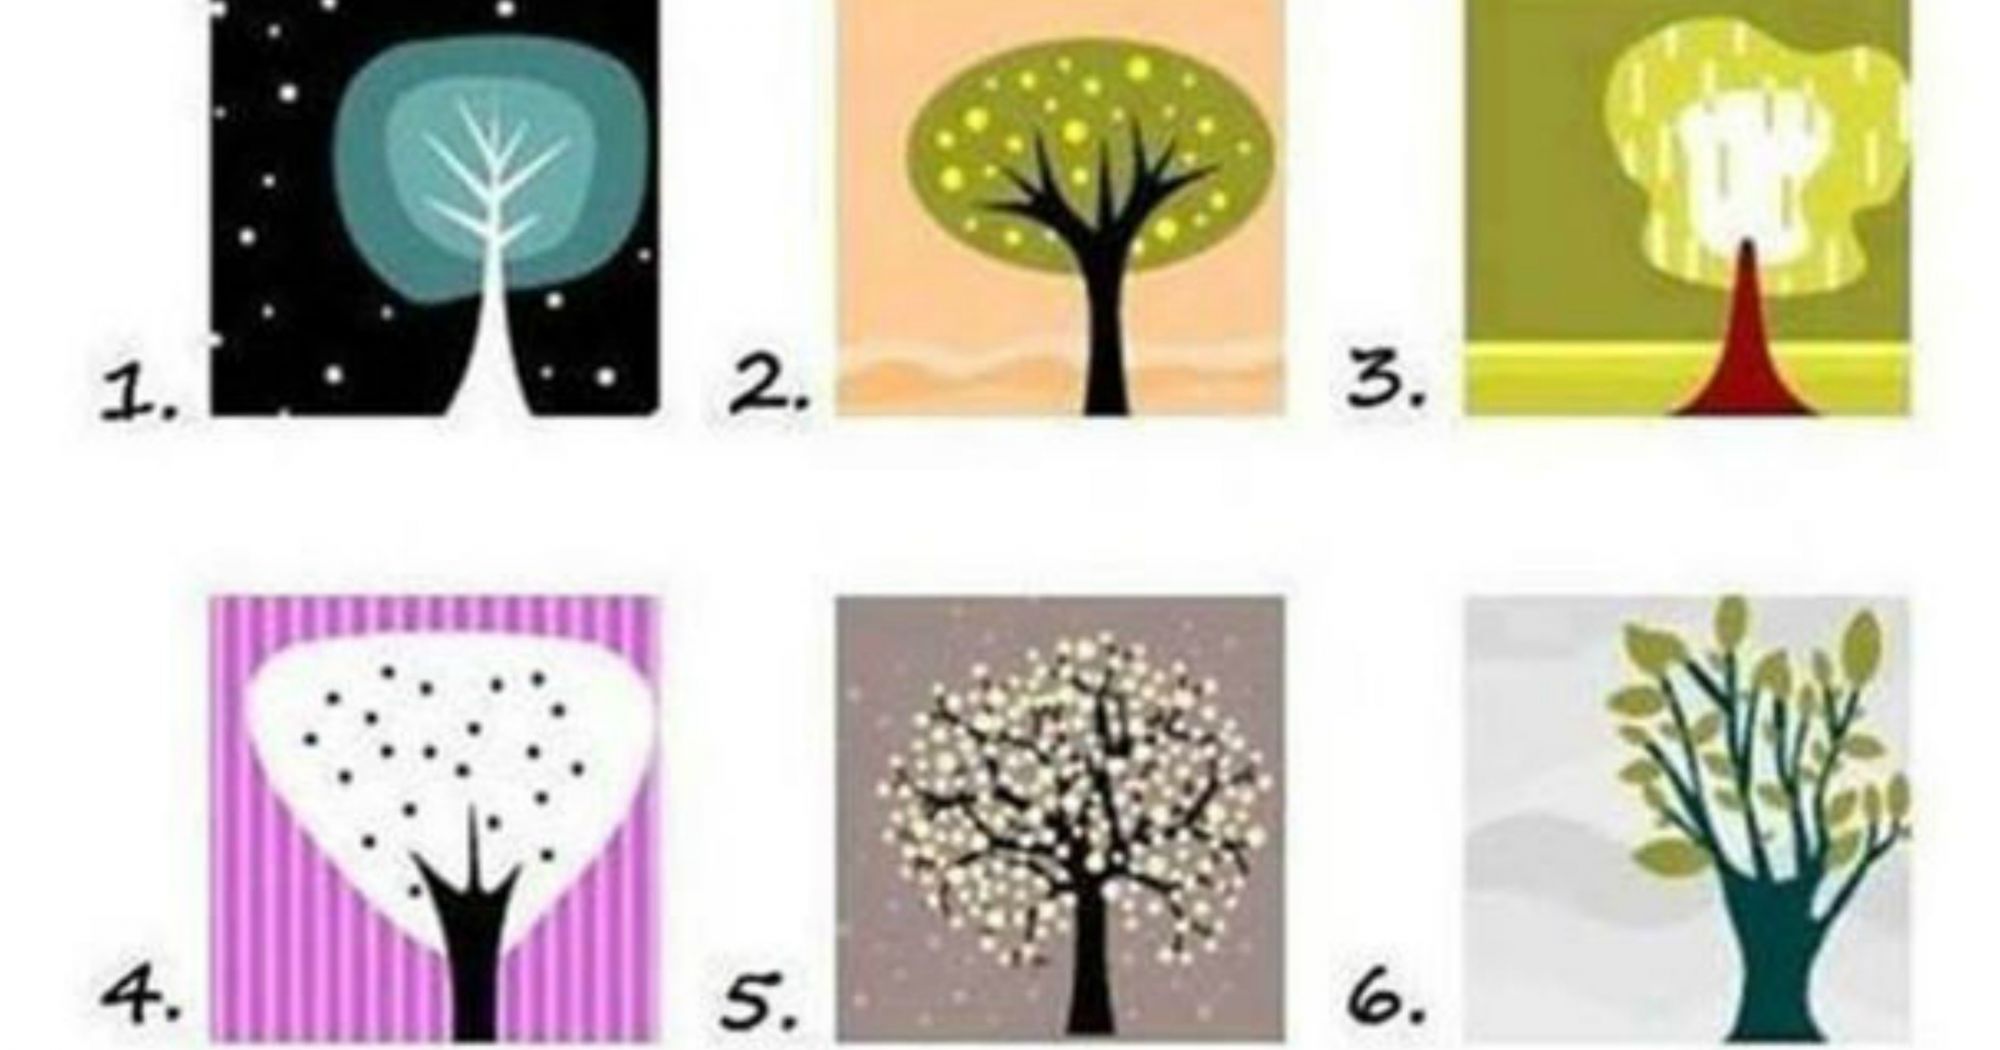 Тест какой ваш класс. Тест личности деревья. Тест выбери дерево. Тест выберите дерево. Тест с деревьями в картинках.